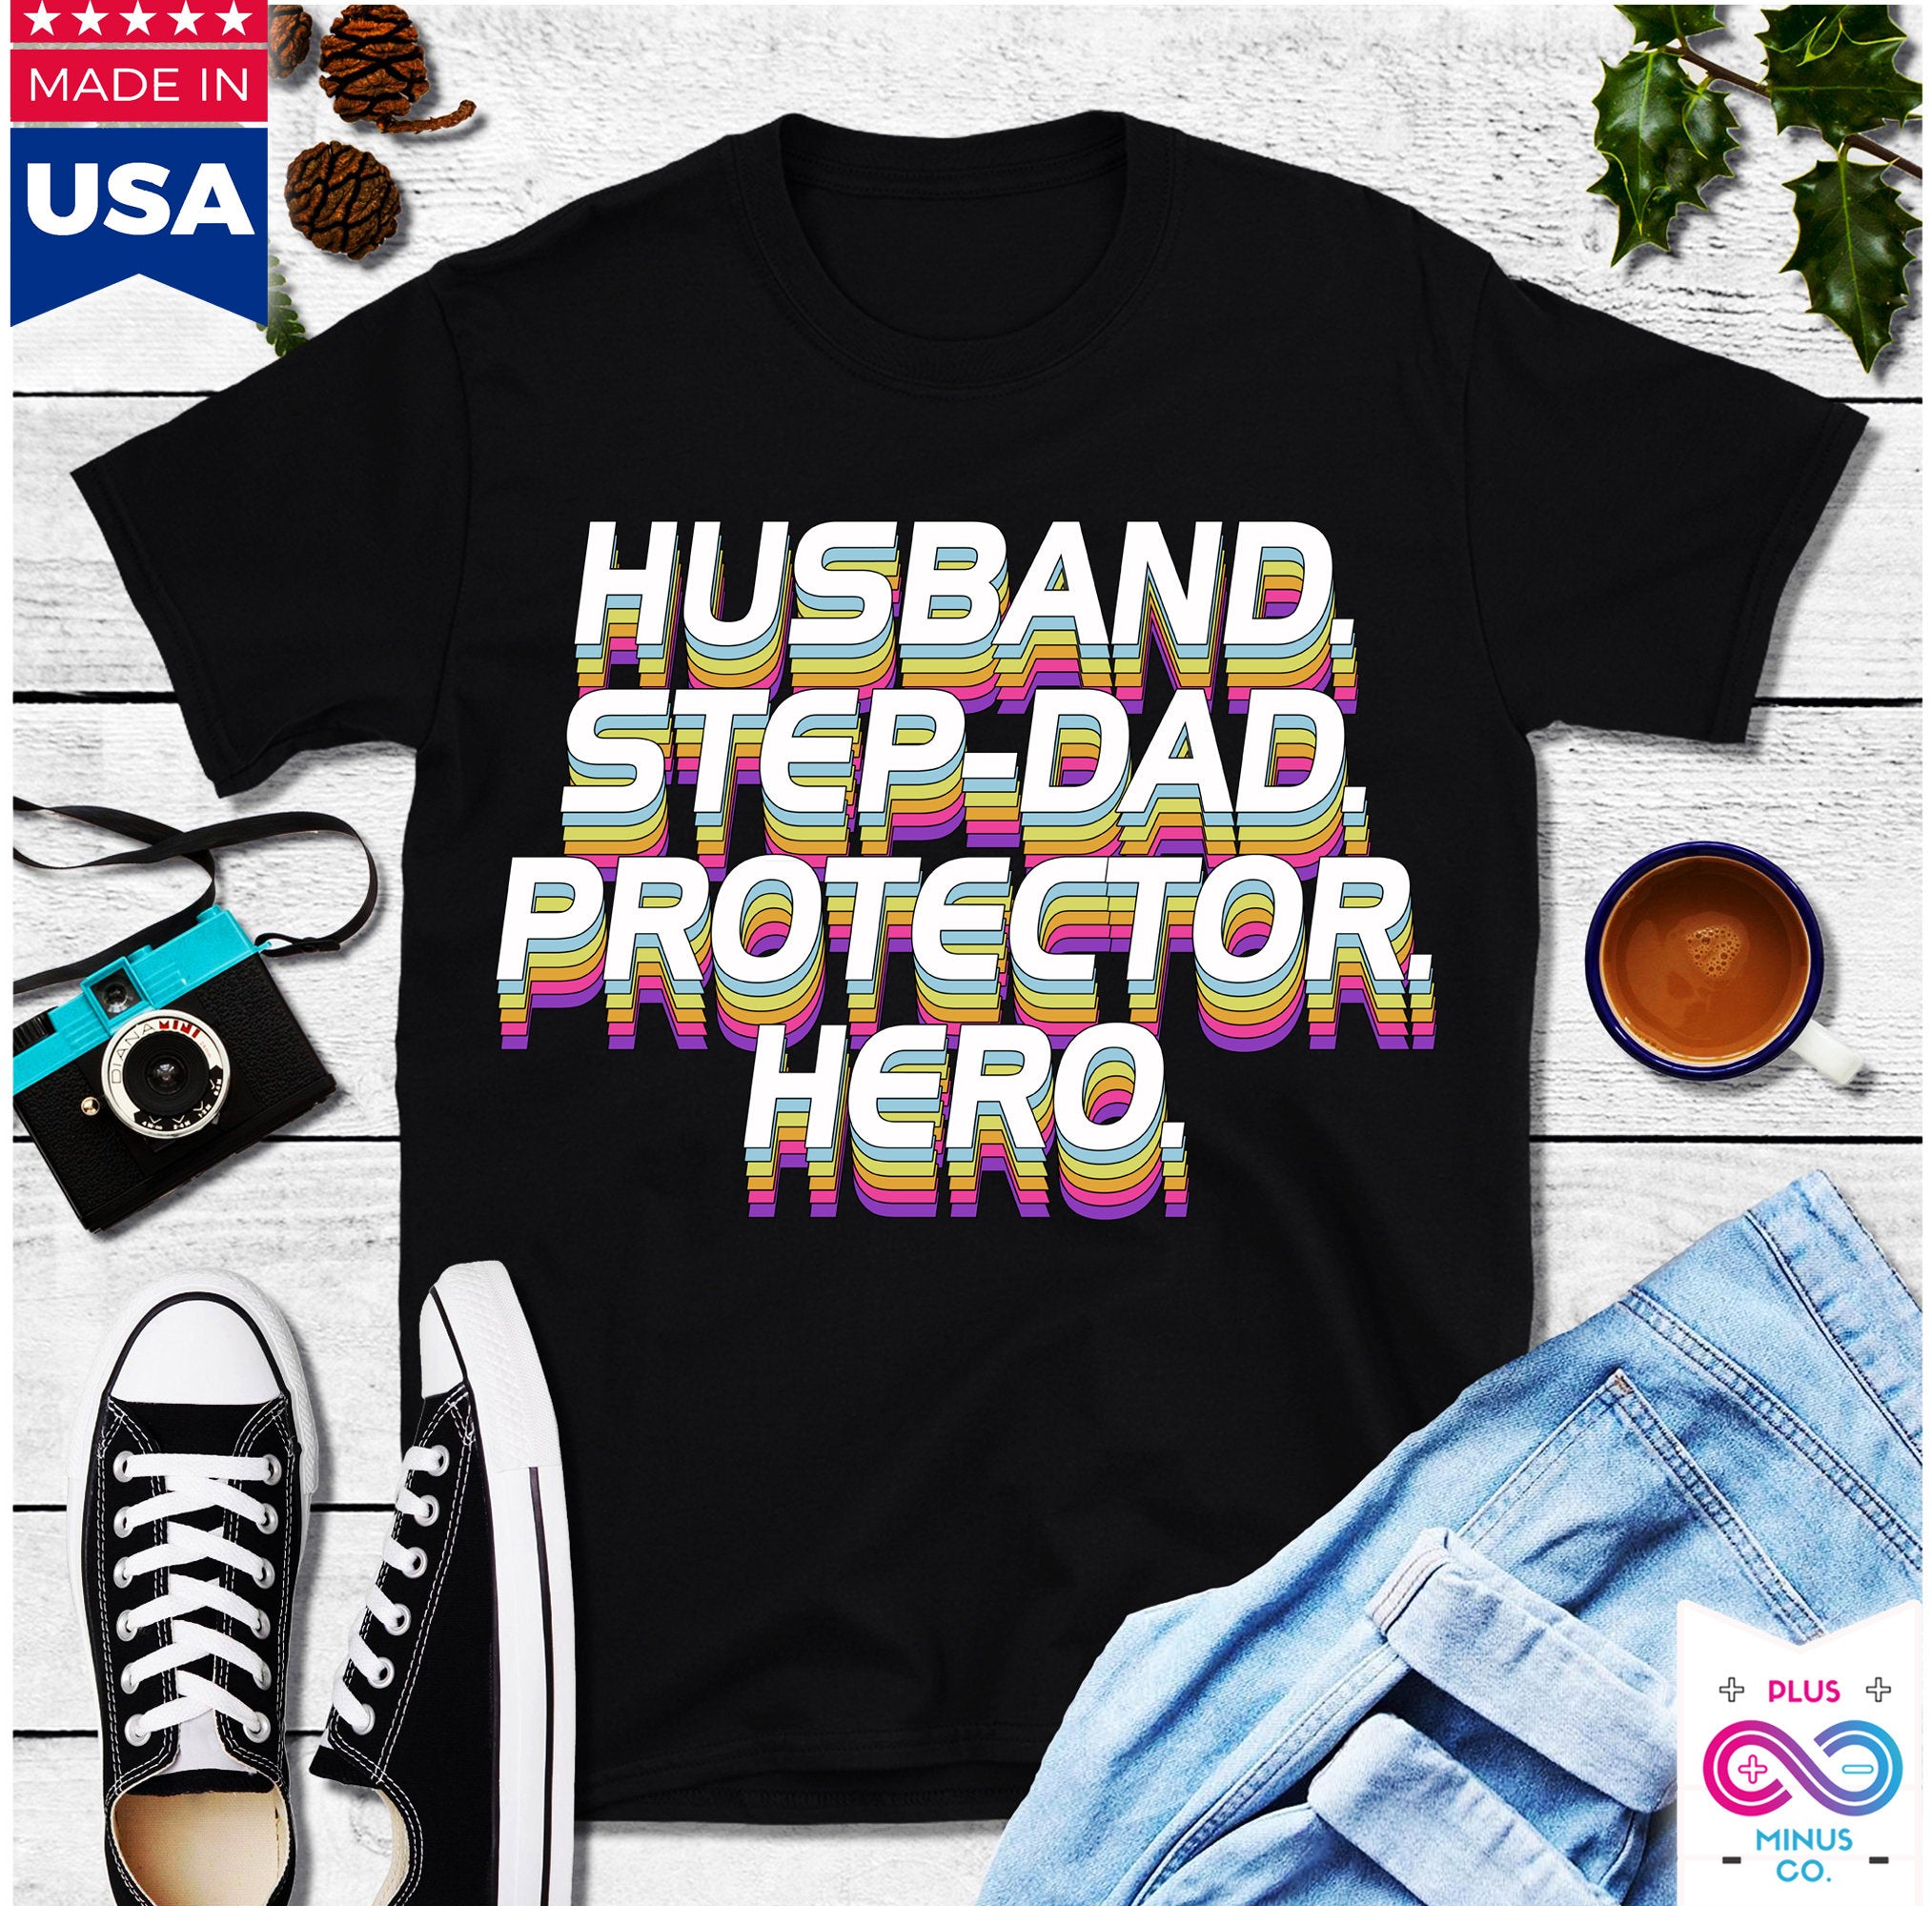 Mand Daddy Protector Hero T-shirts, Fars Dags gave, Personlig farsskjorte, Helteskjorte, Fars Dagsgave, Fars T-shirt, Fars Dagsskjorte - plusminusco.com